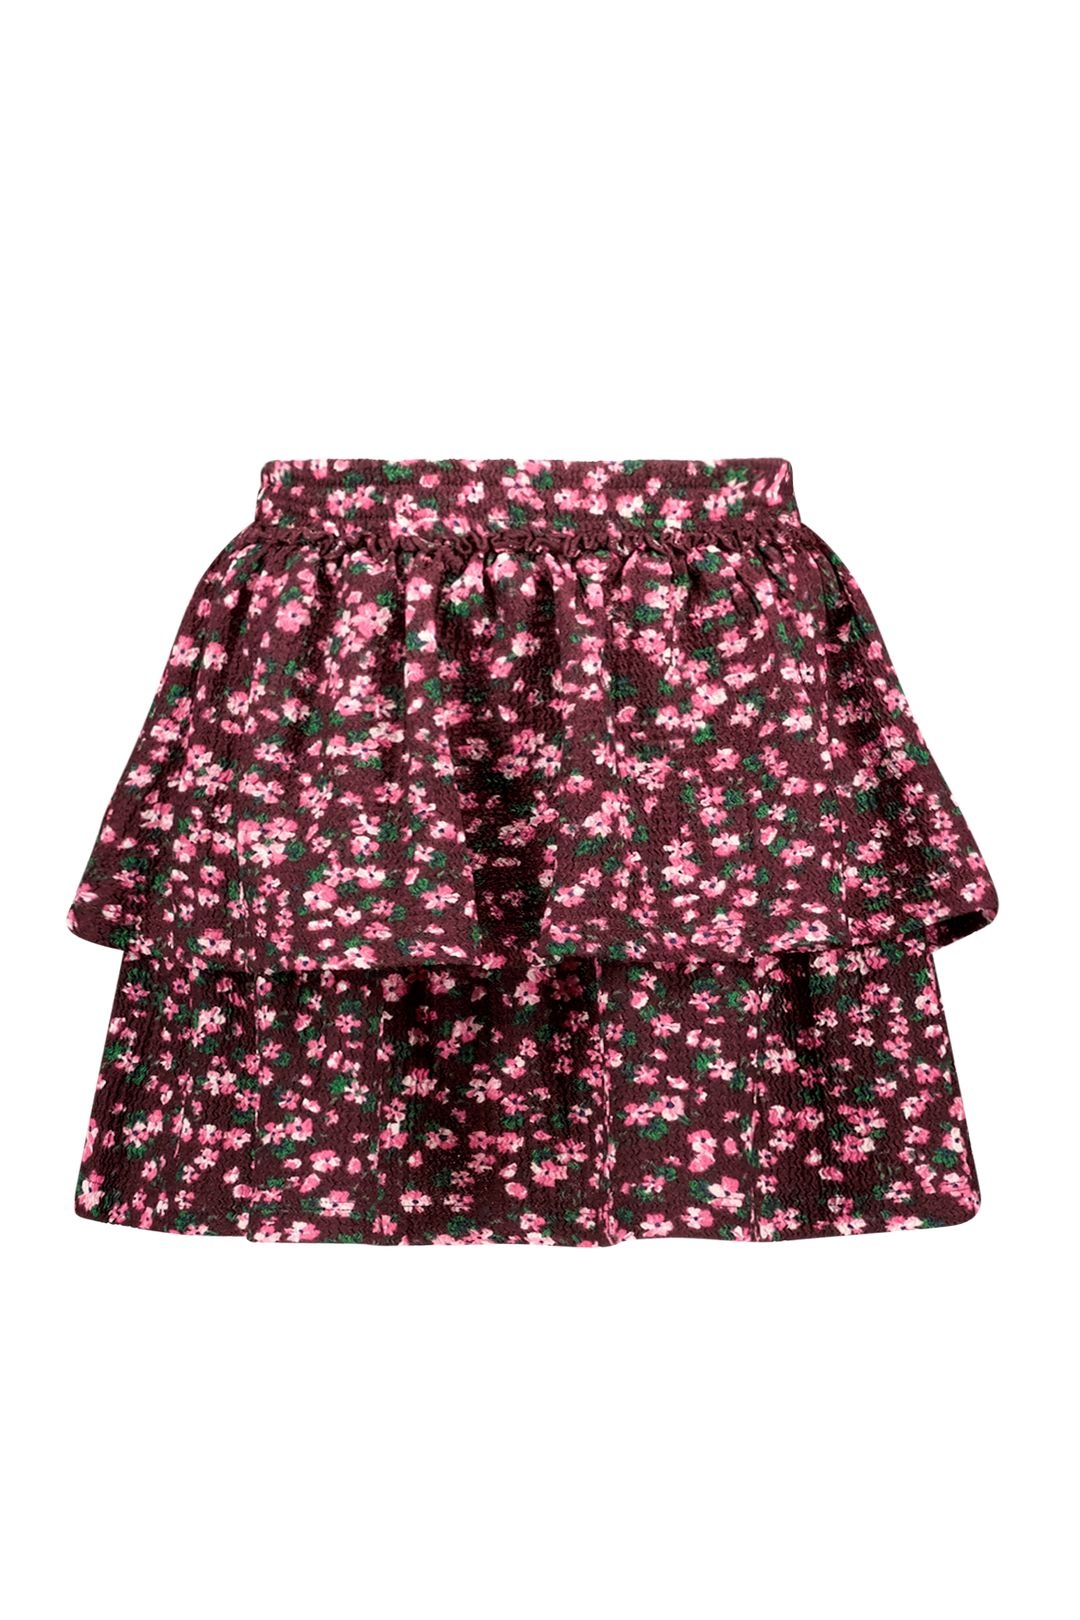 B.Nosy Girls Kids Skirts Y308-5750 maat 104